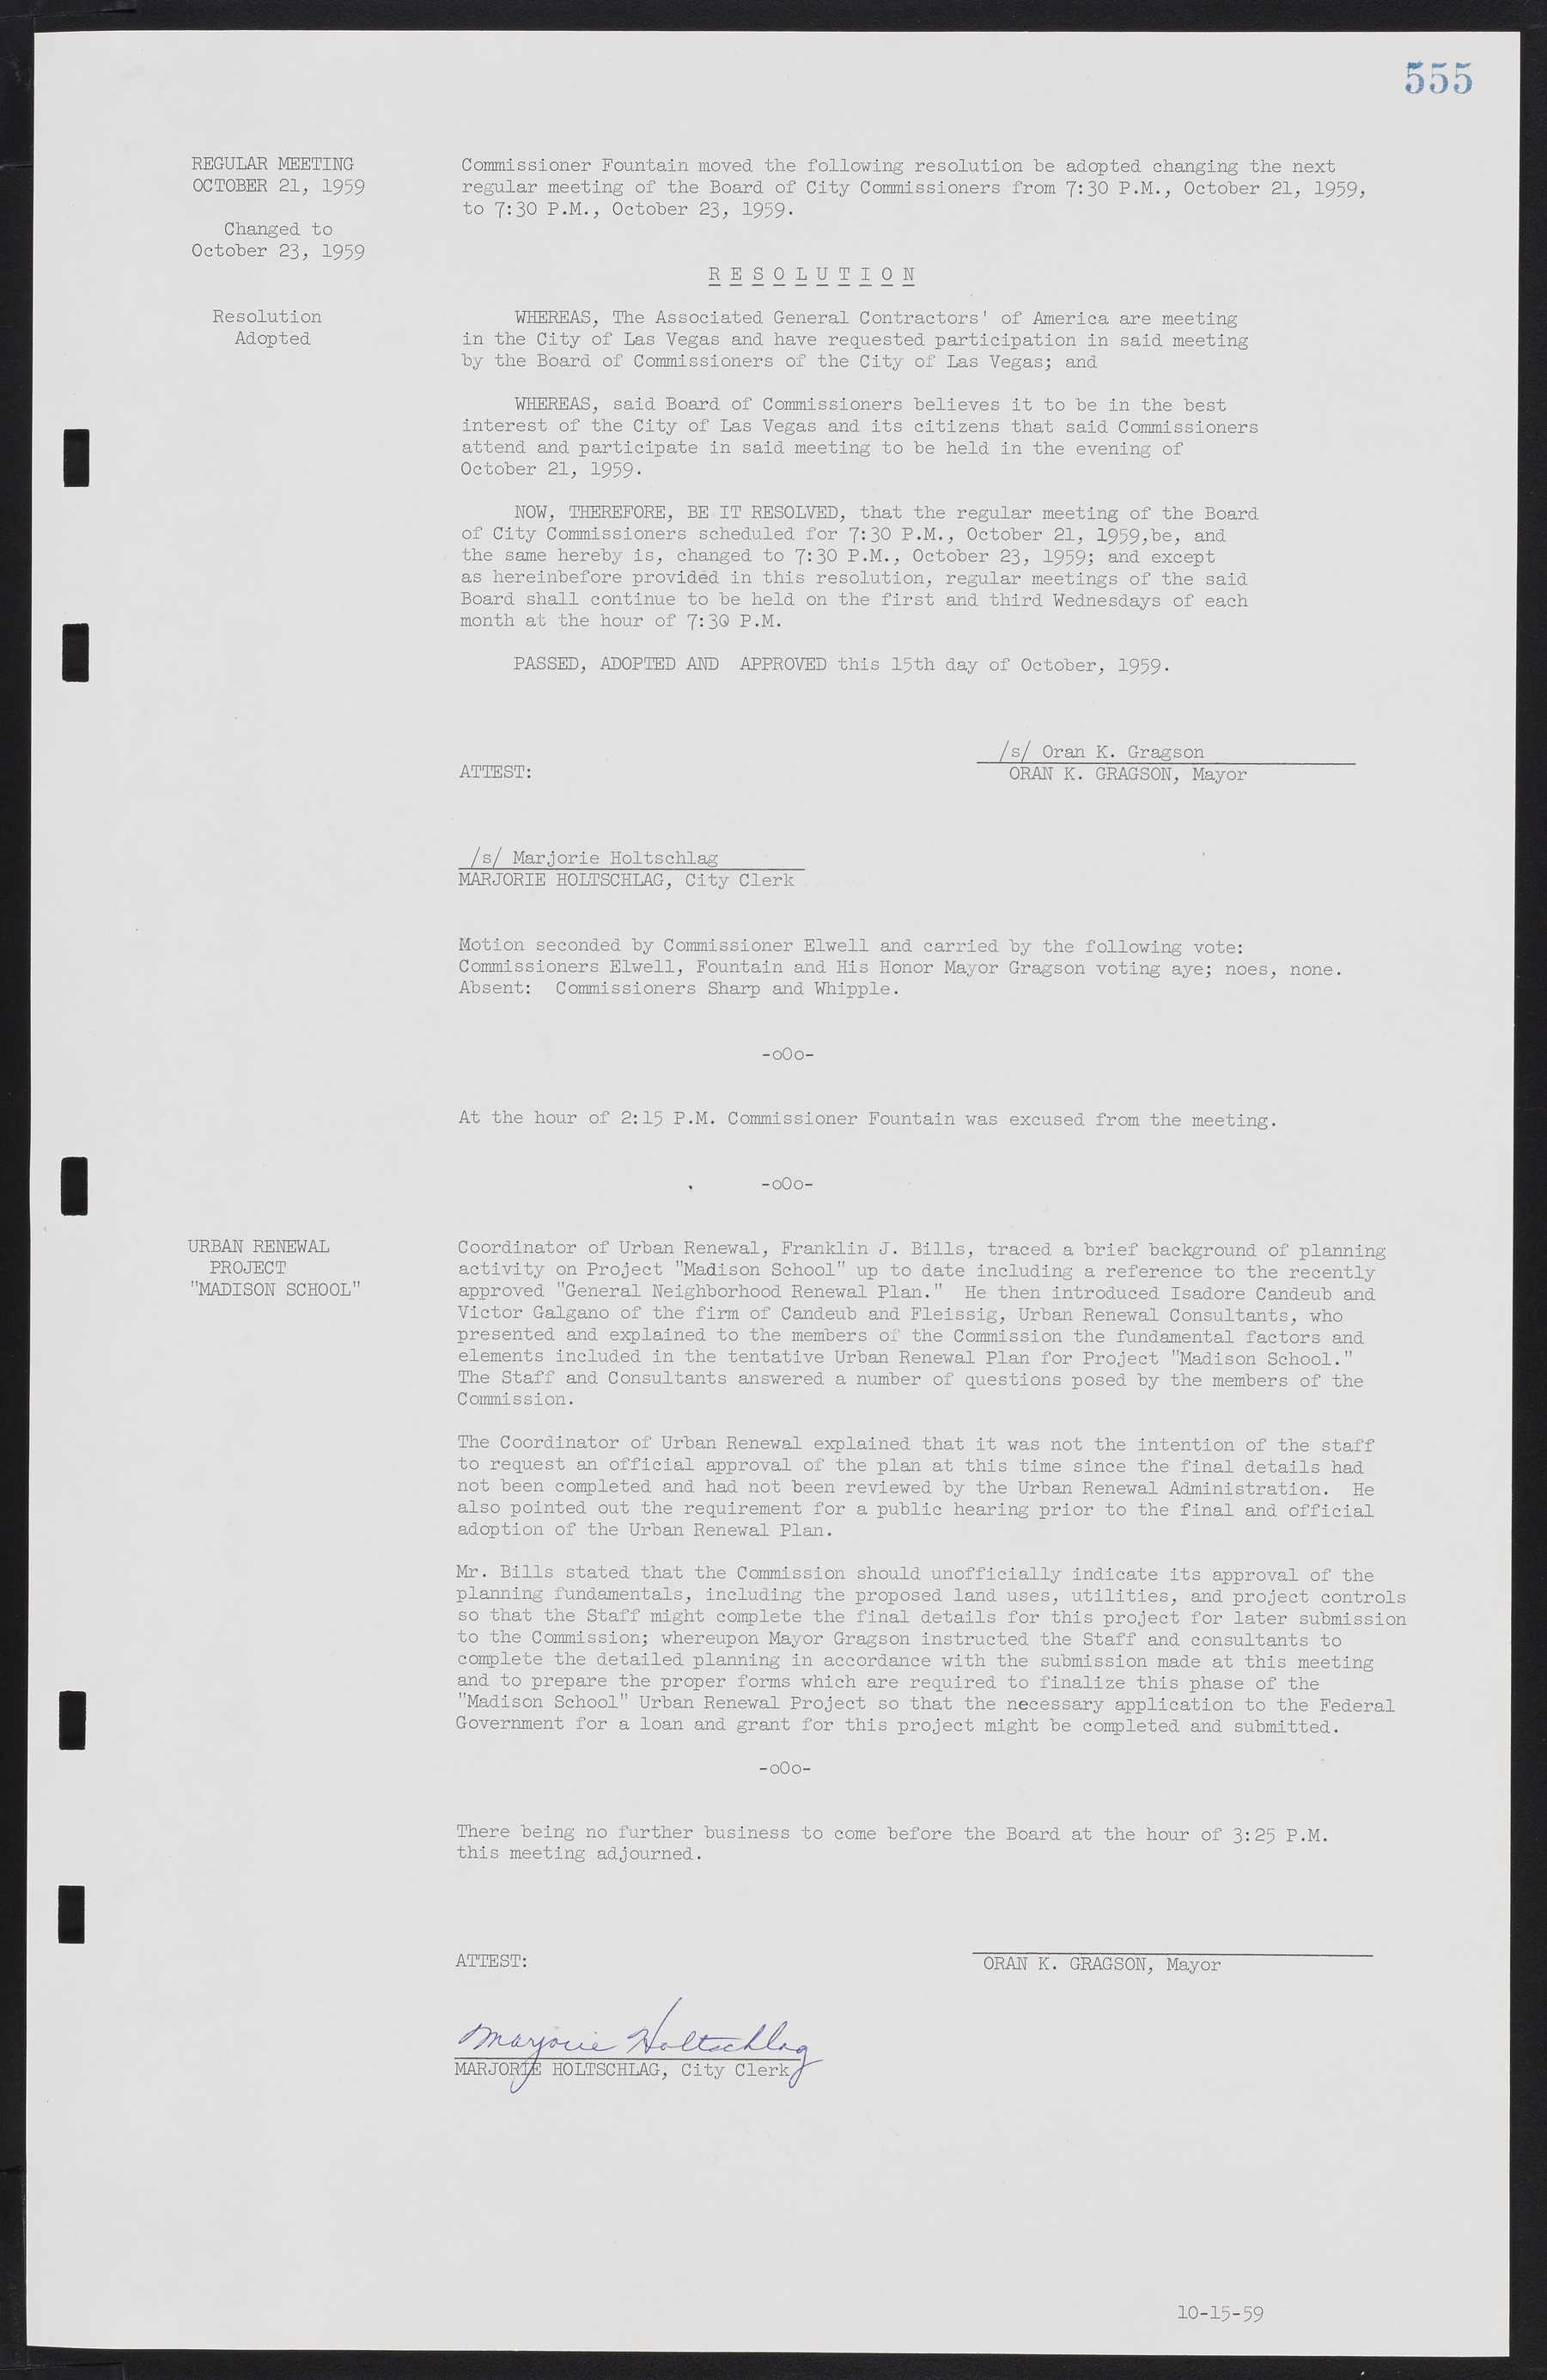 Las Vegas City Commission Minutes, November 20, 1957 to December 2, 1959, lvc000011-591